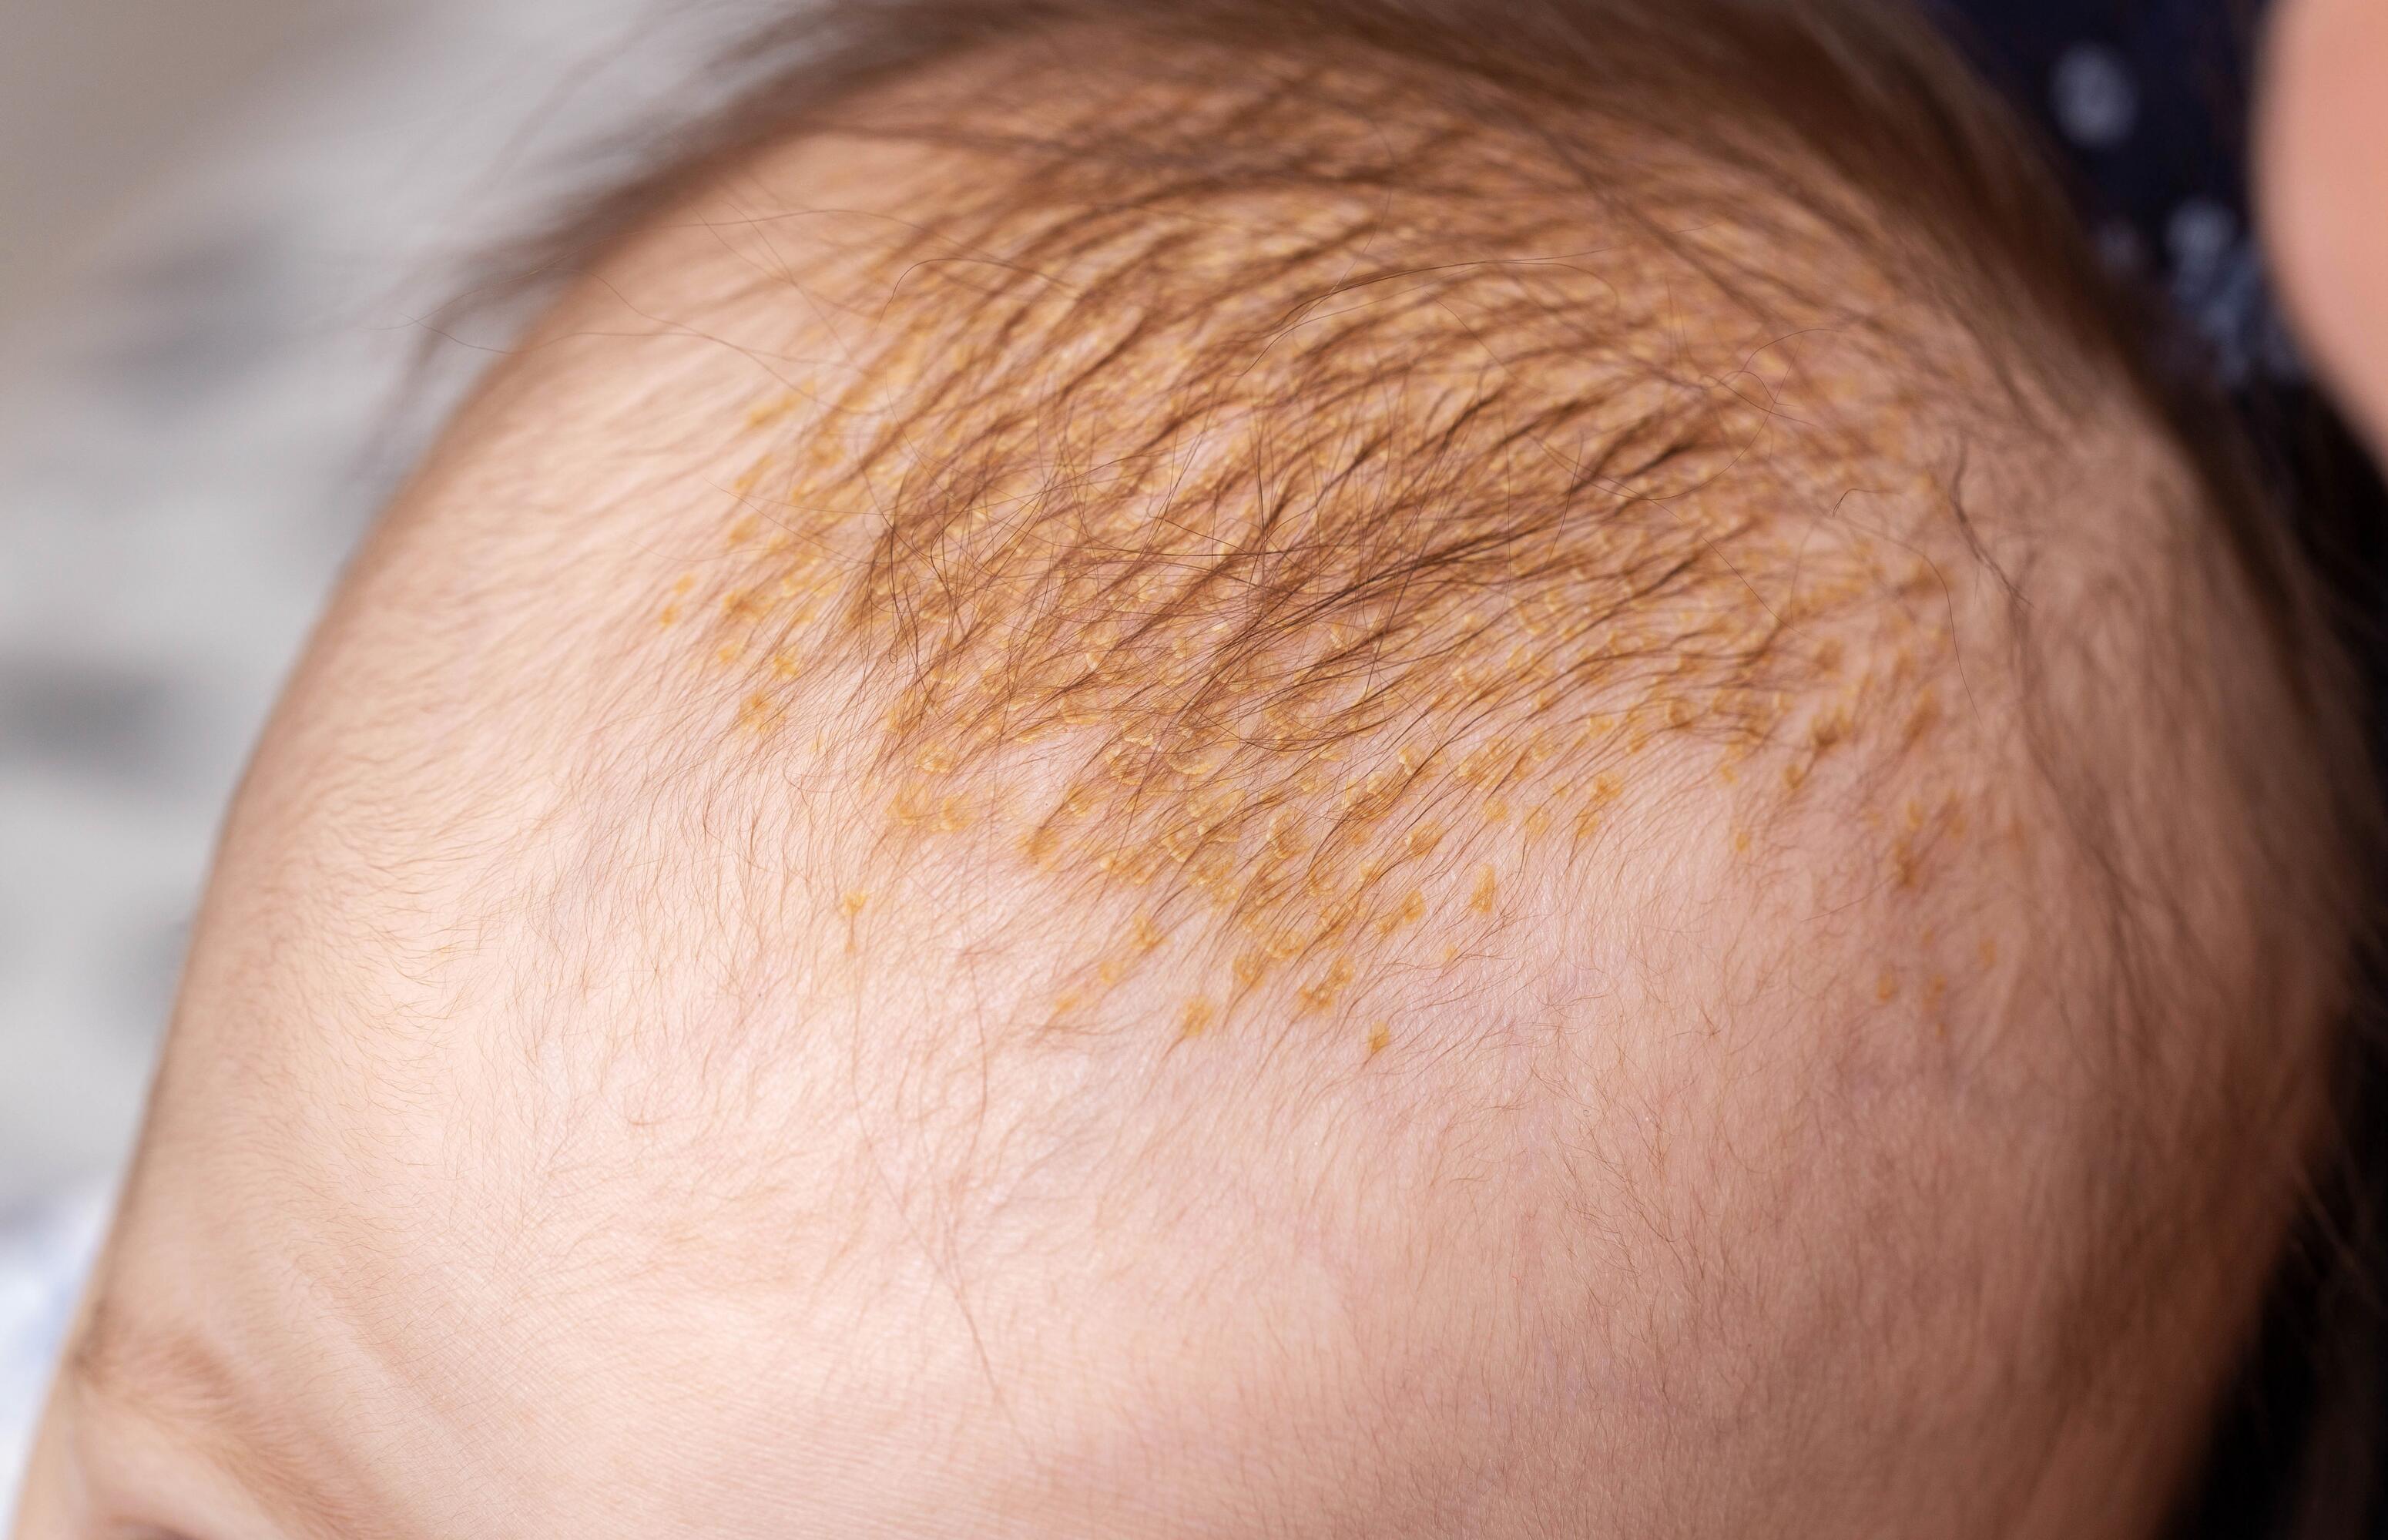 Scalp of a baby with seborrheic dermatitis